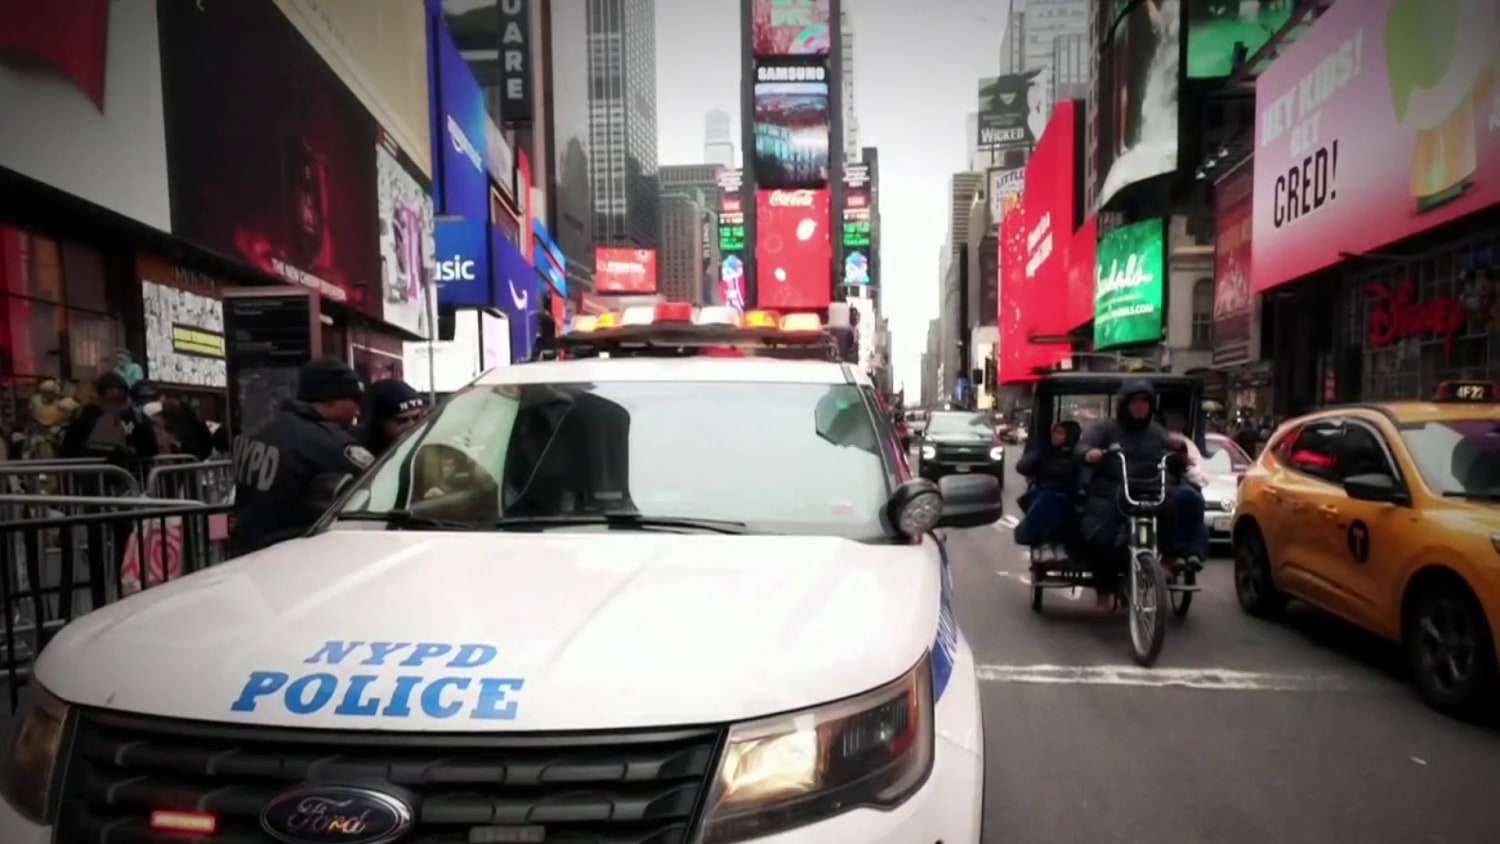 NY Governor Calls for Deportation After Violent Assault on Police in Times Square